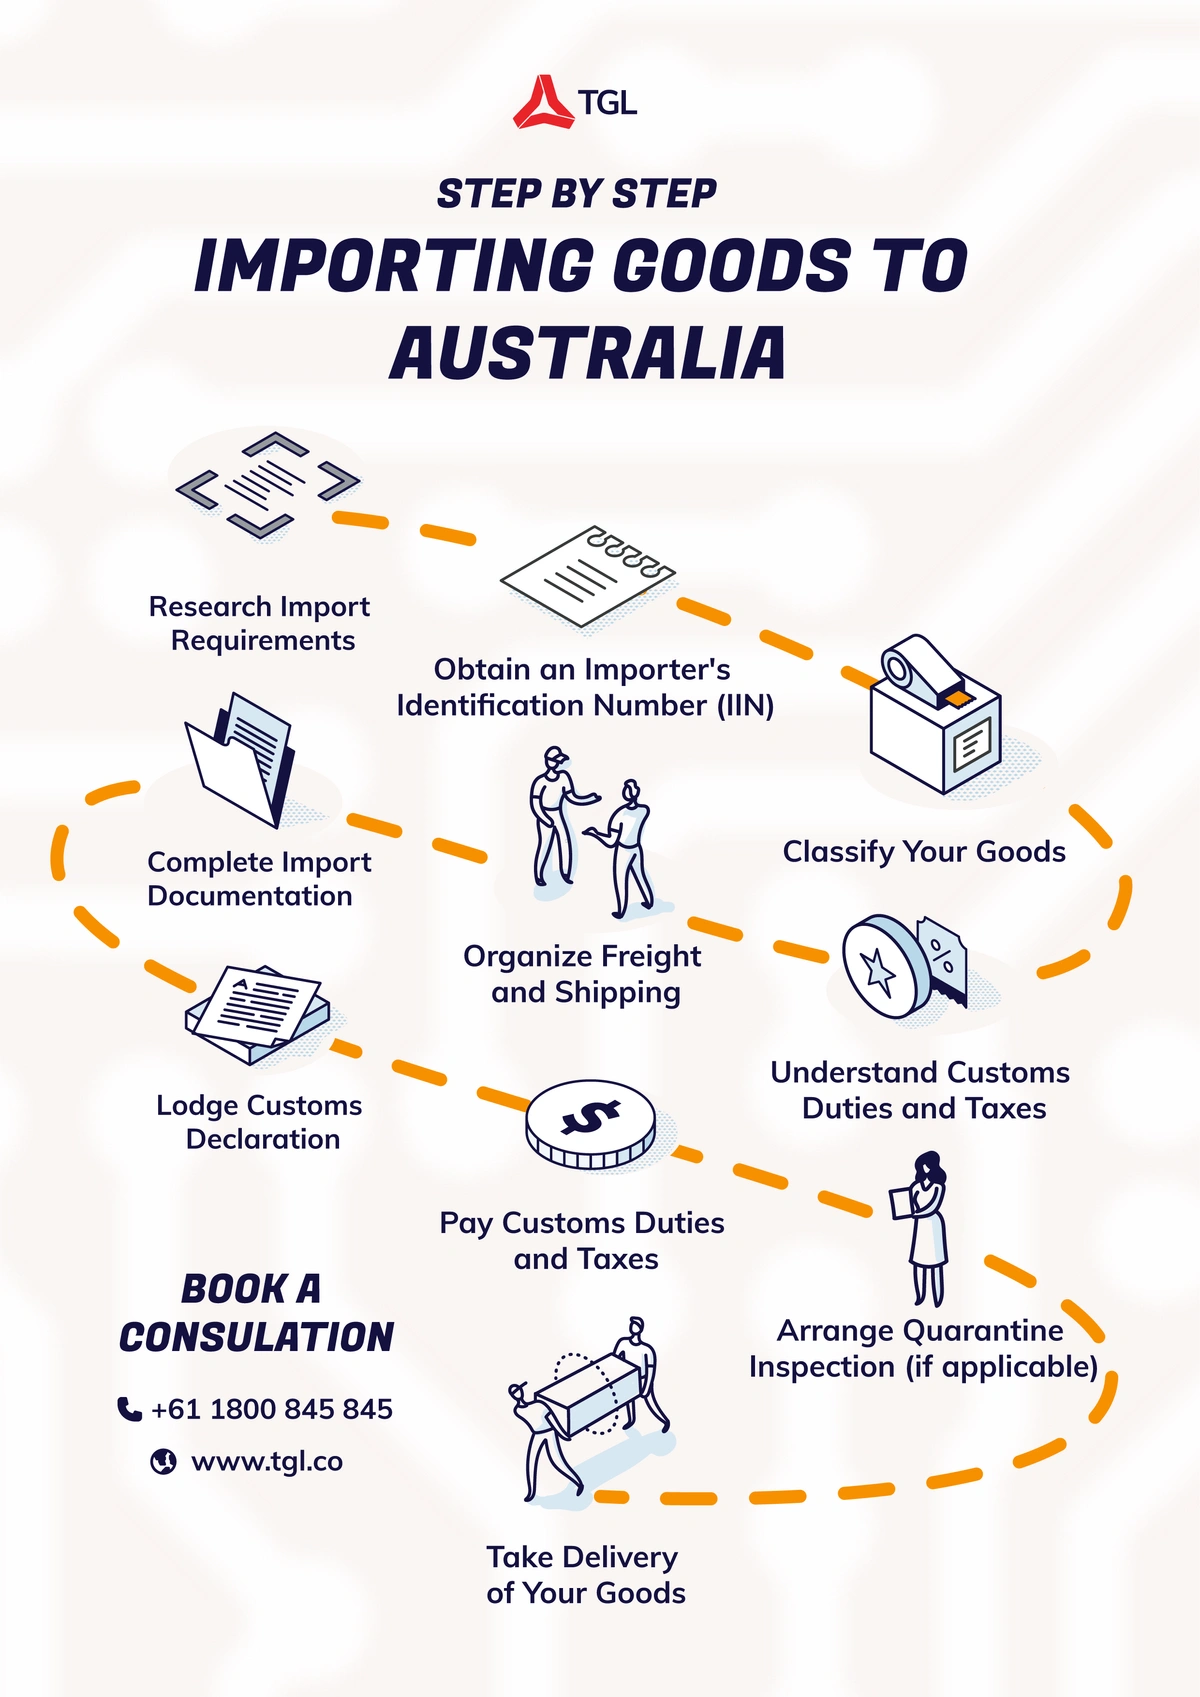 How to Import Goods to Australia